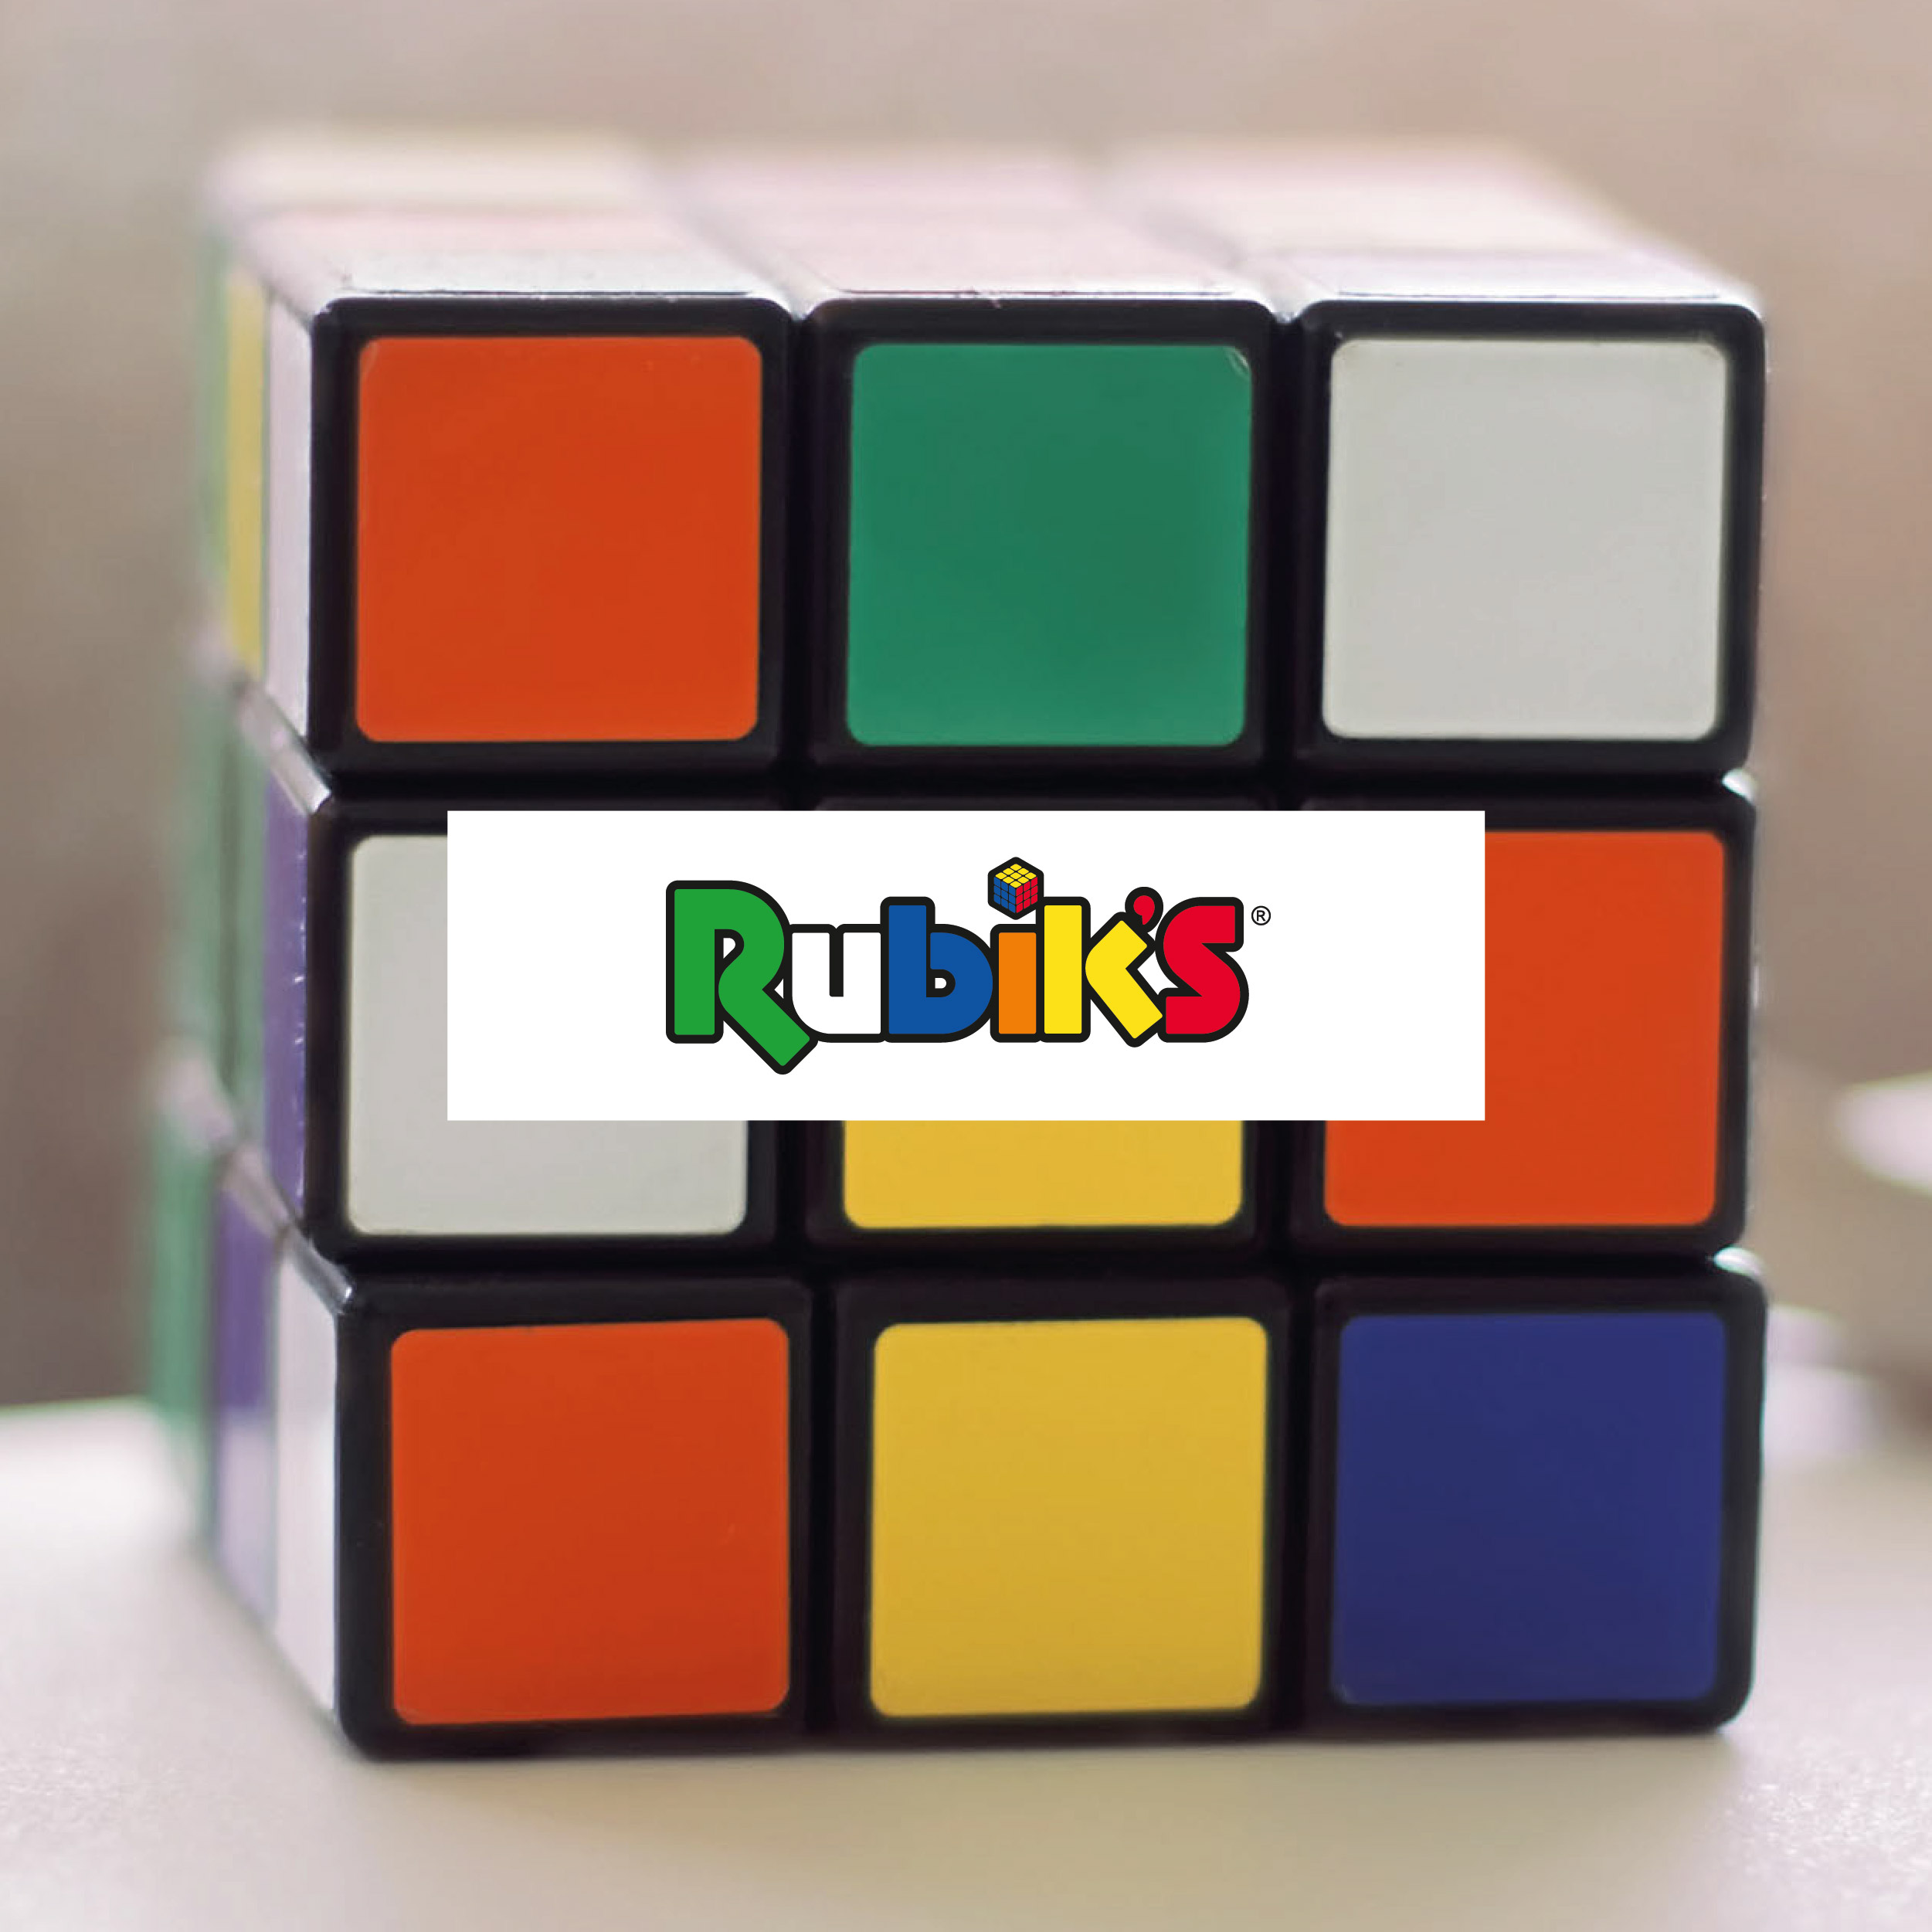 PromoBrand_Rubiks_Promotional_Merchandise_Brands_Bounce_Creative_Designs